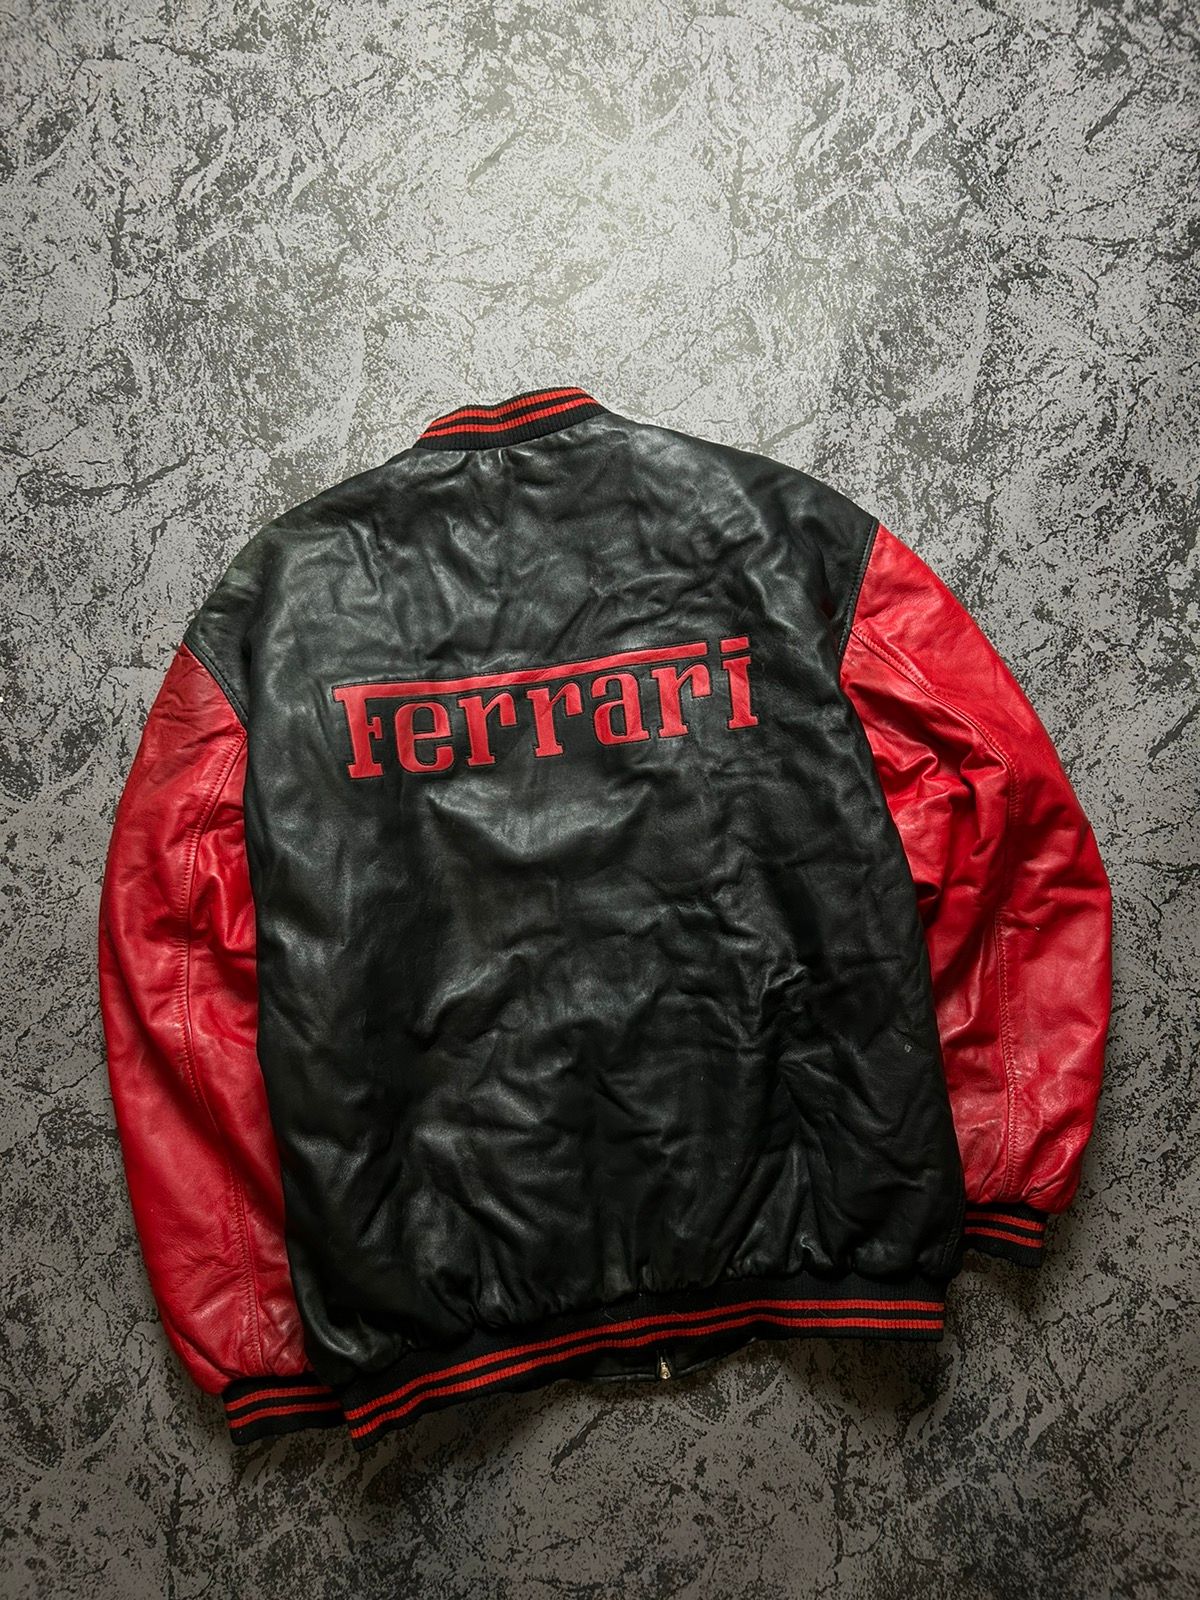 Pre-owned Ferrari X Racing Vintage Ferarri Leather Jacket Big Logo Black Limited